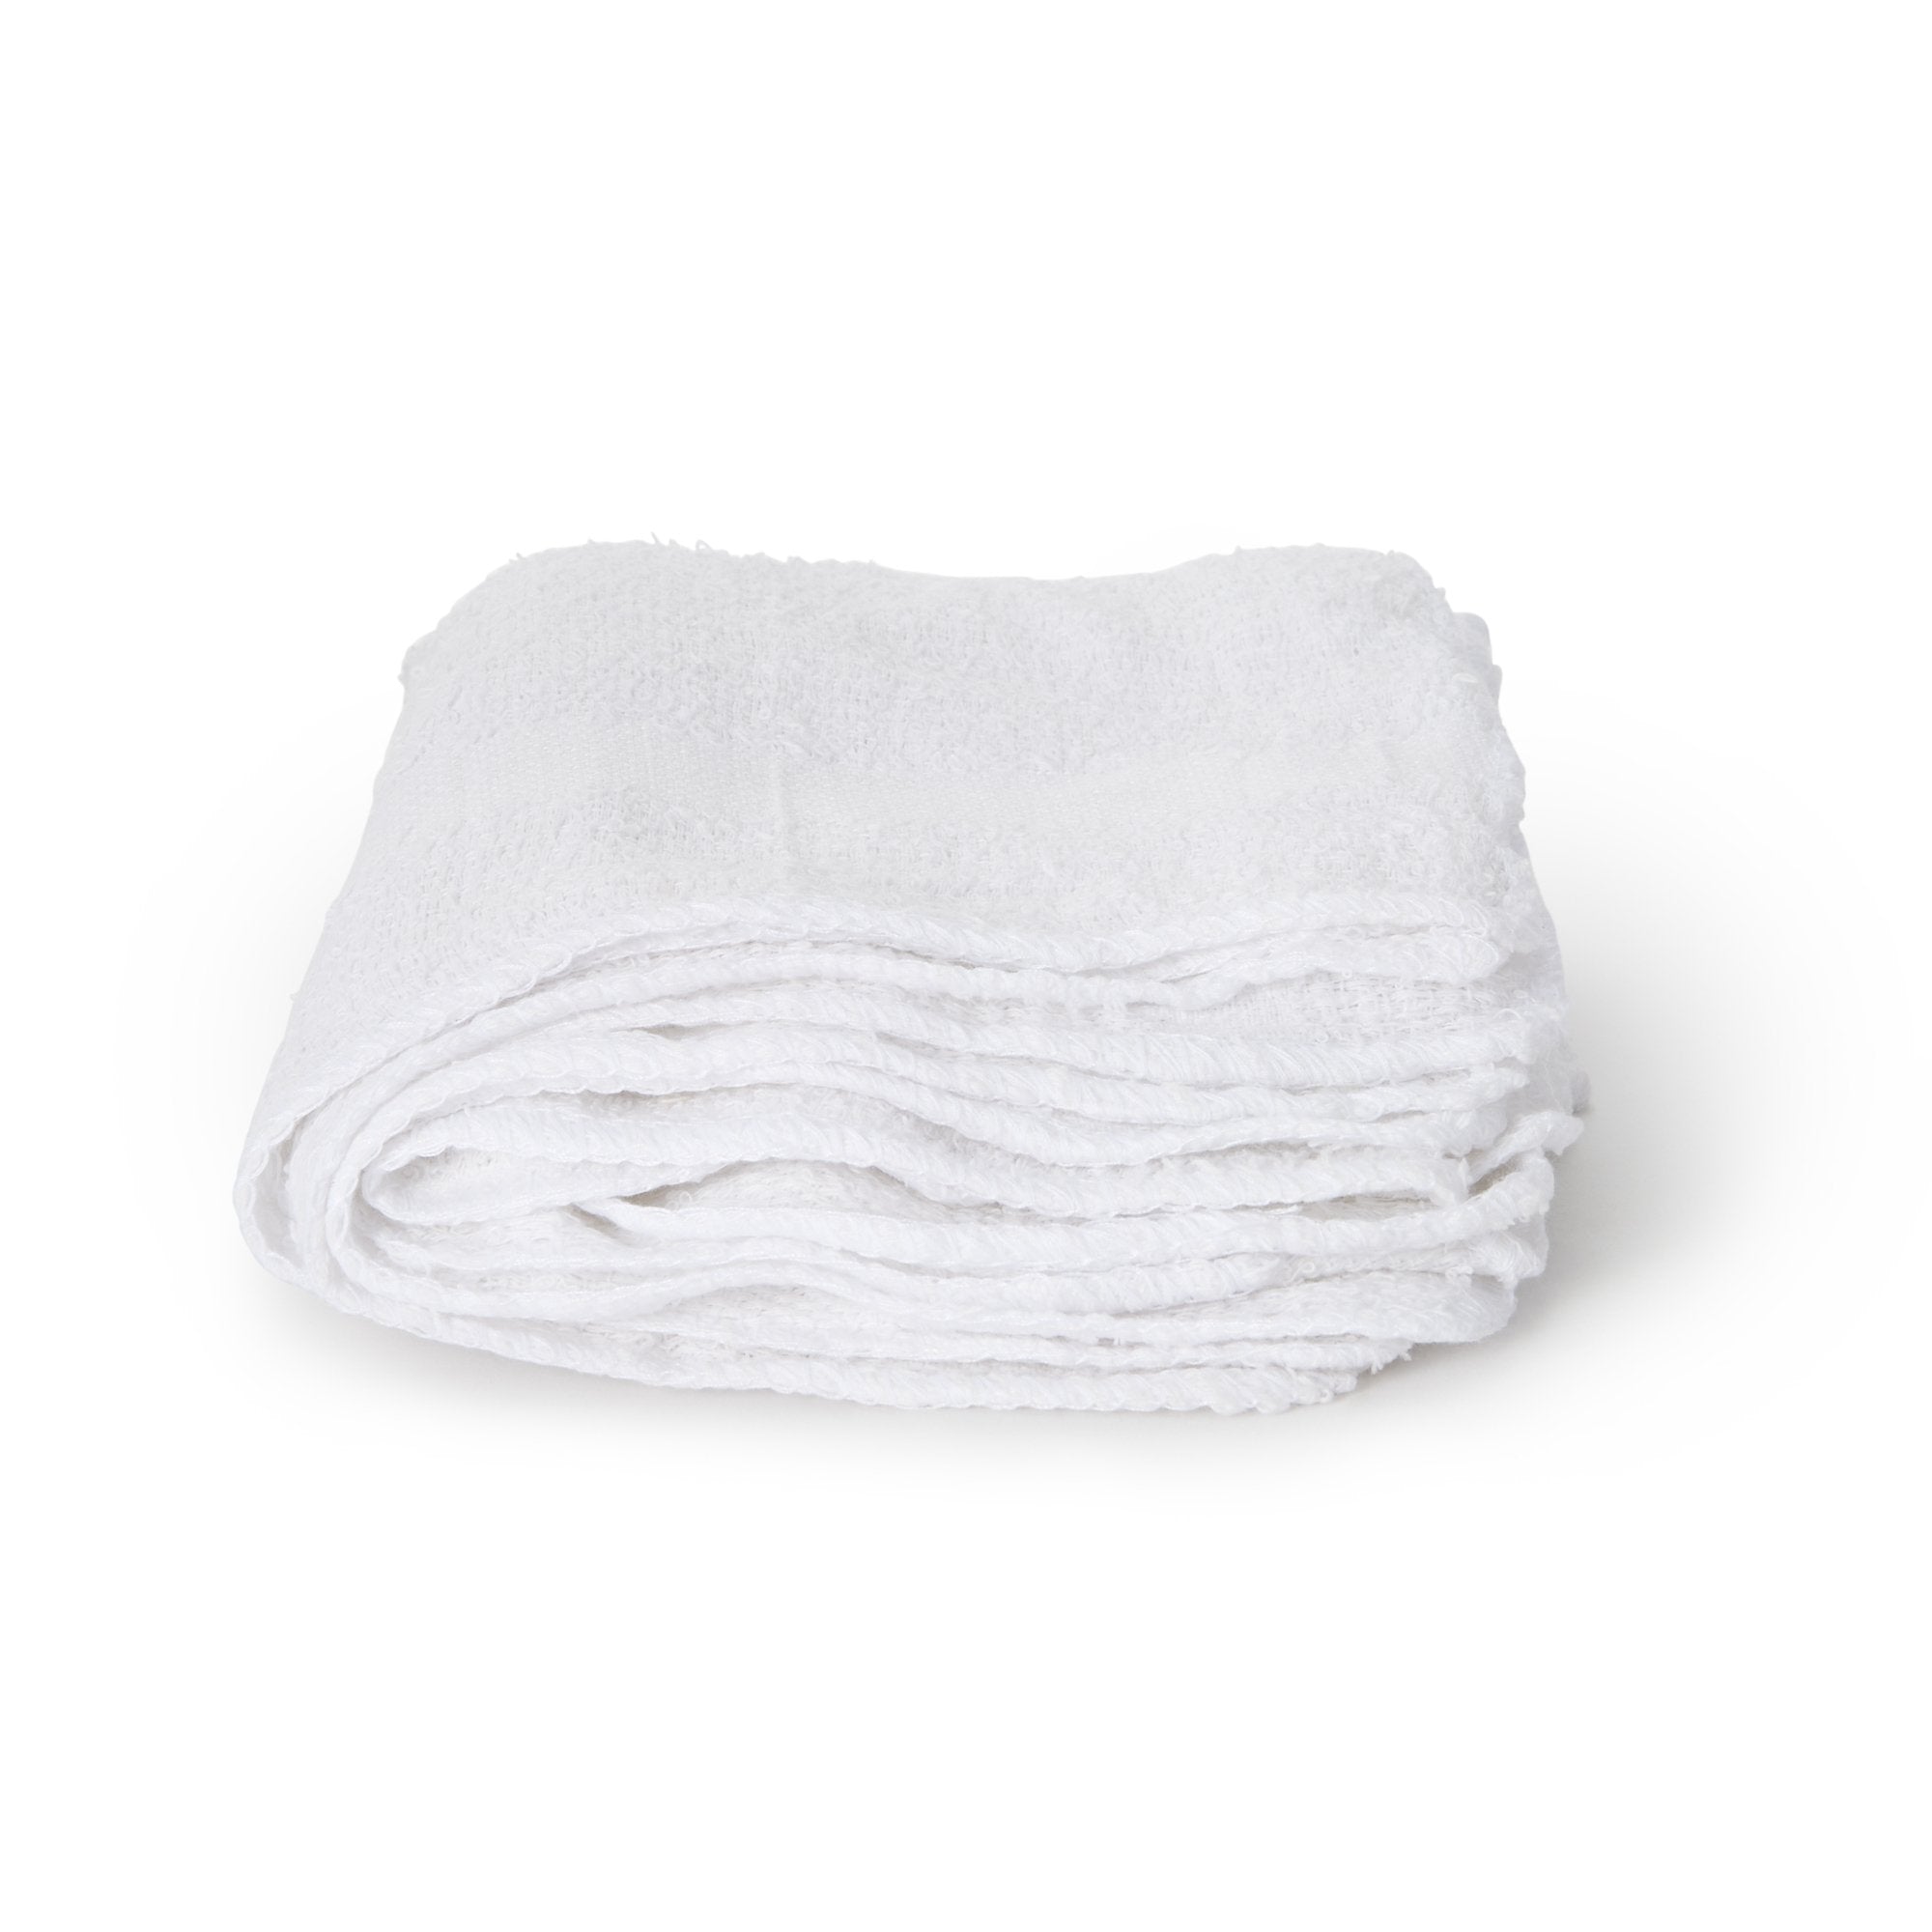 Washcloth 12 X 12 Inch White Reusable